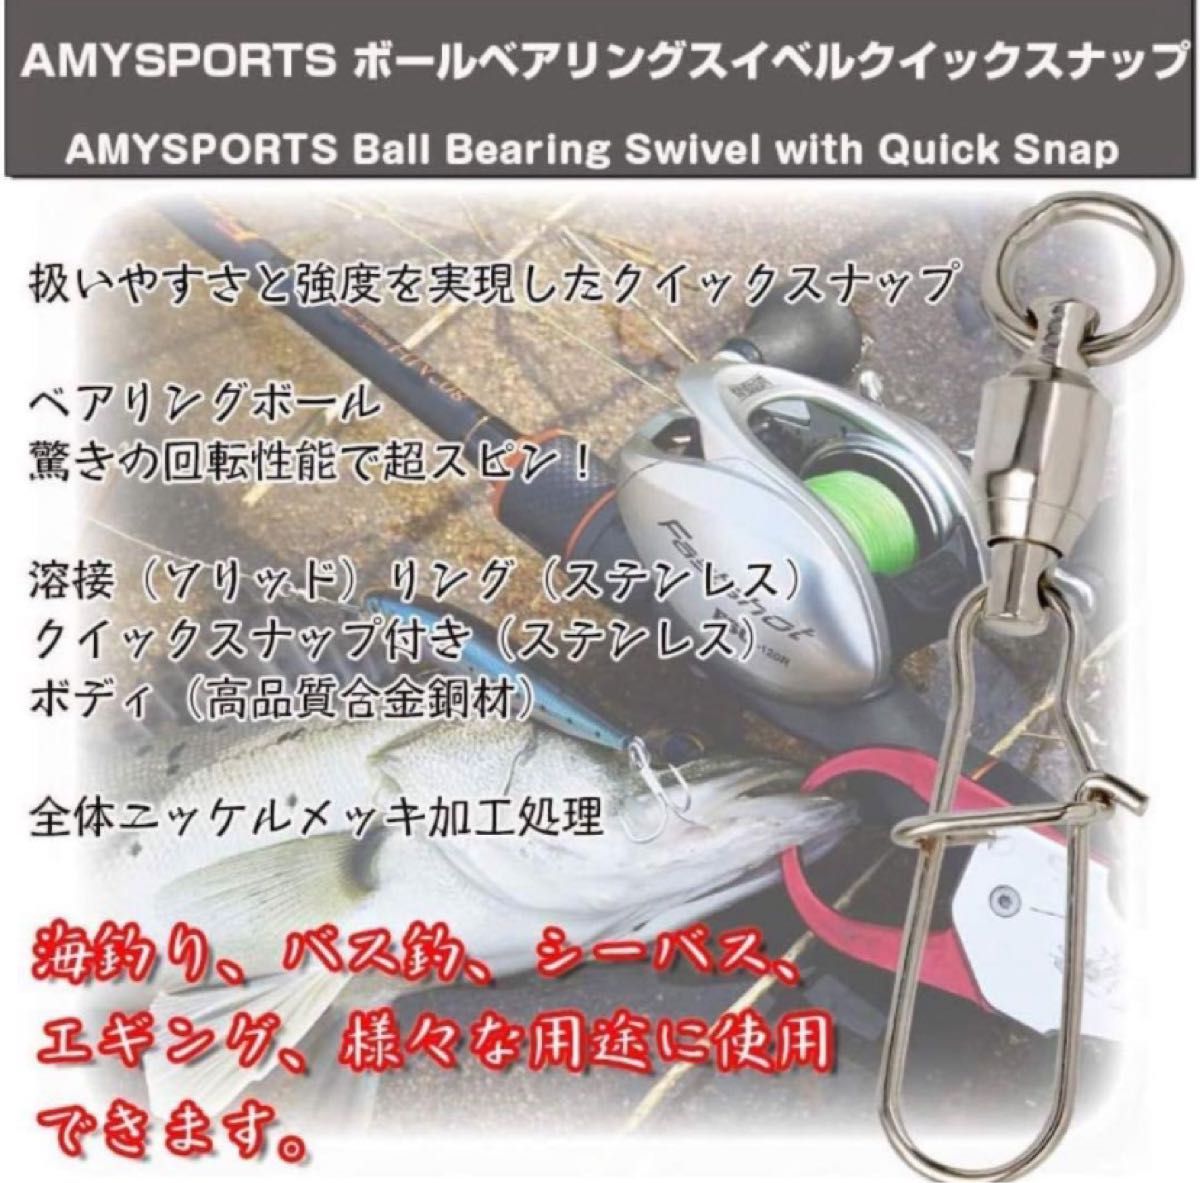 AMYSPORTS 高強度 ステンレス スイベル 耐腐食 海釣り 釣り道具 ルアー スナップ ボールベアリングスイベル ボール 